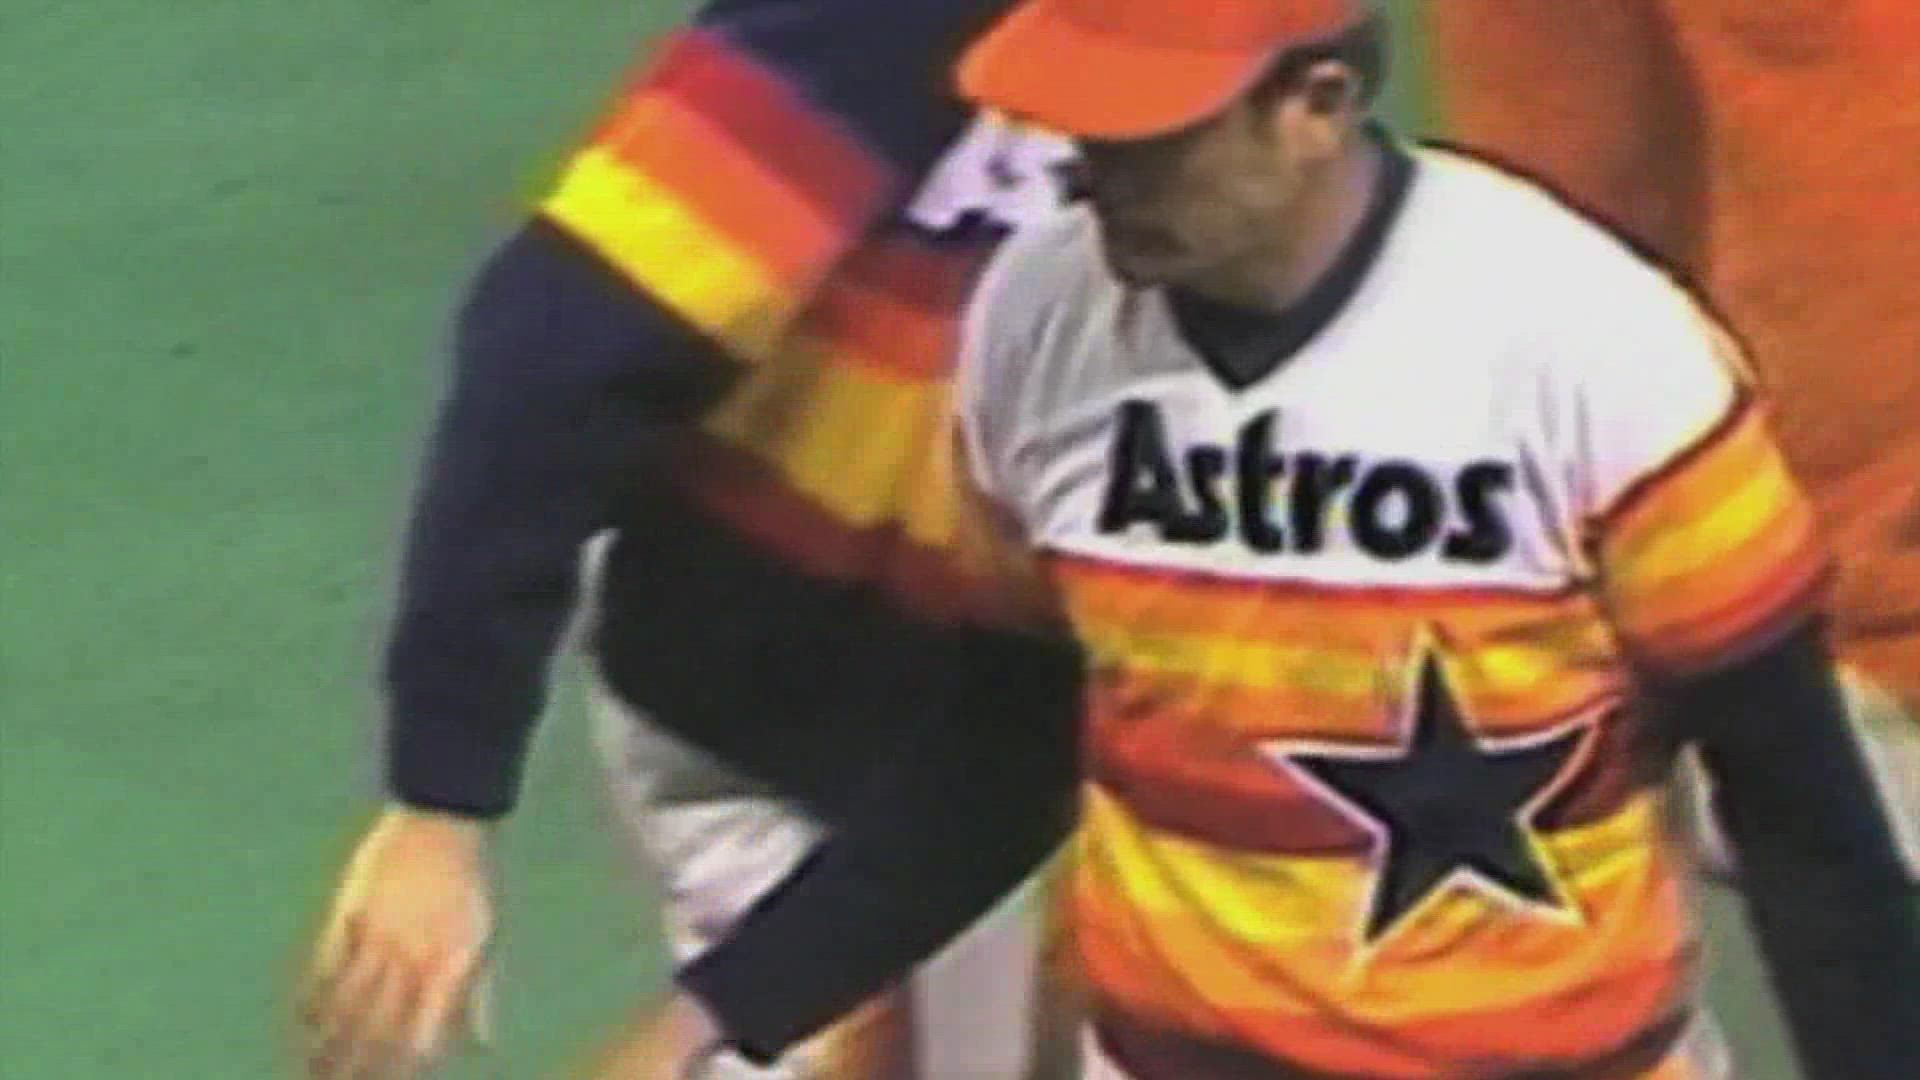 Houston Astros Tequila Sunrise jersey history